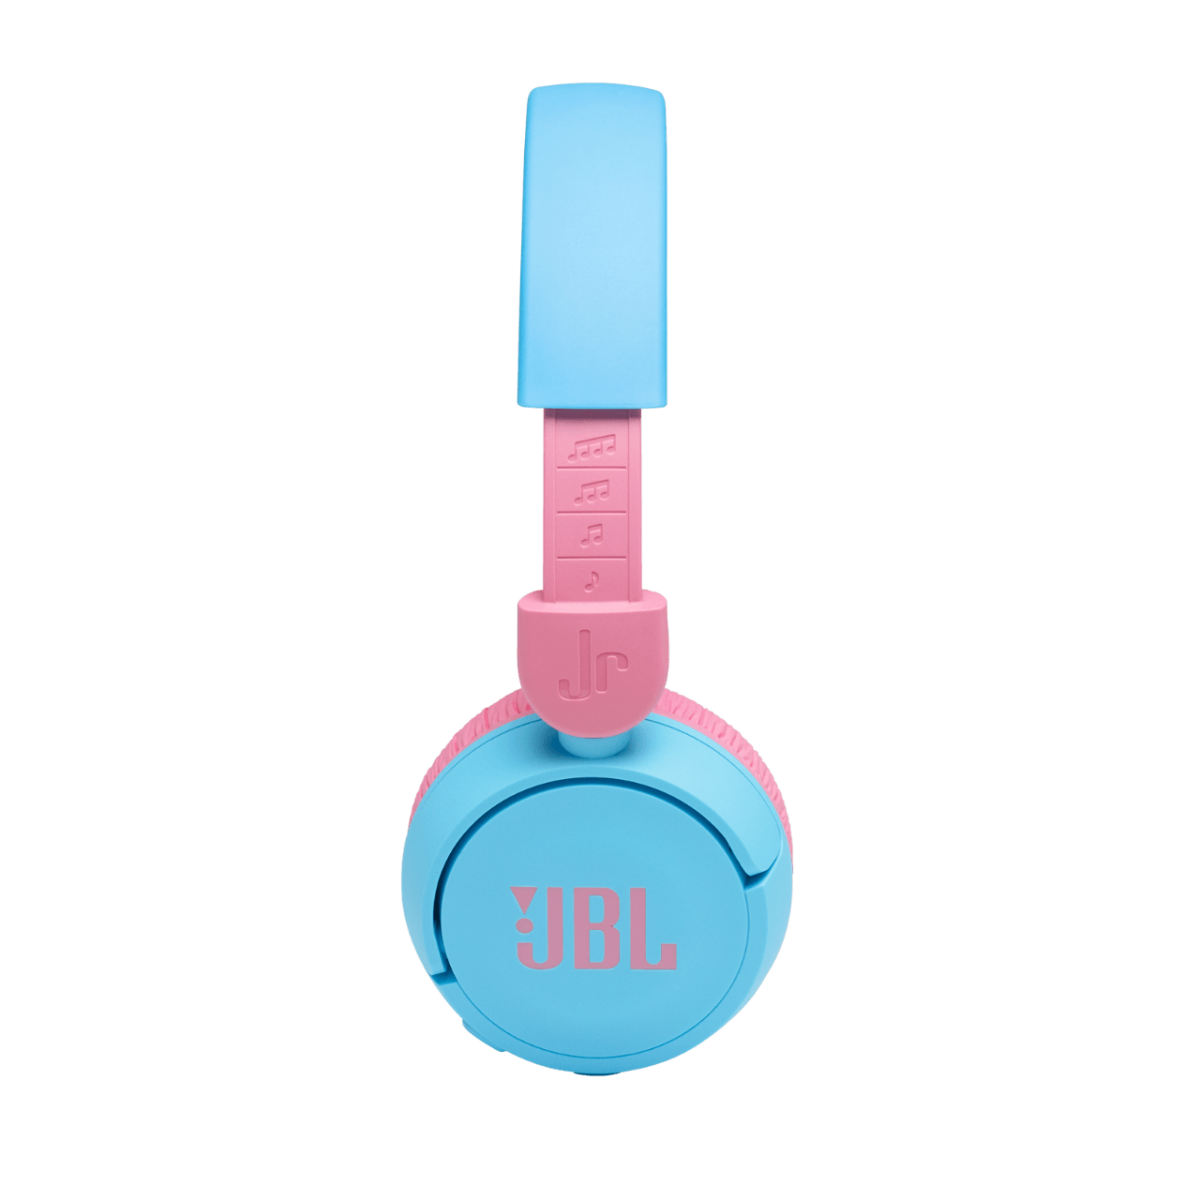 Słuchawki JBL JR310BT różowo jasnoniebieskie